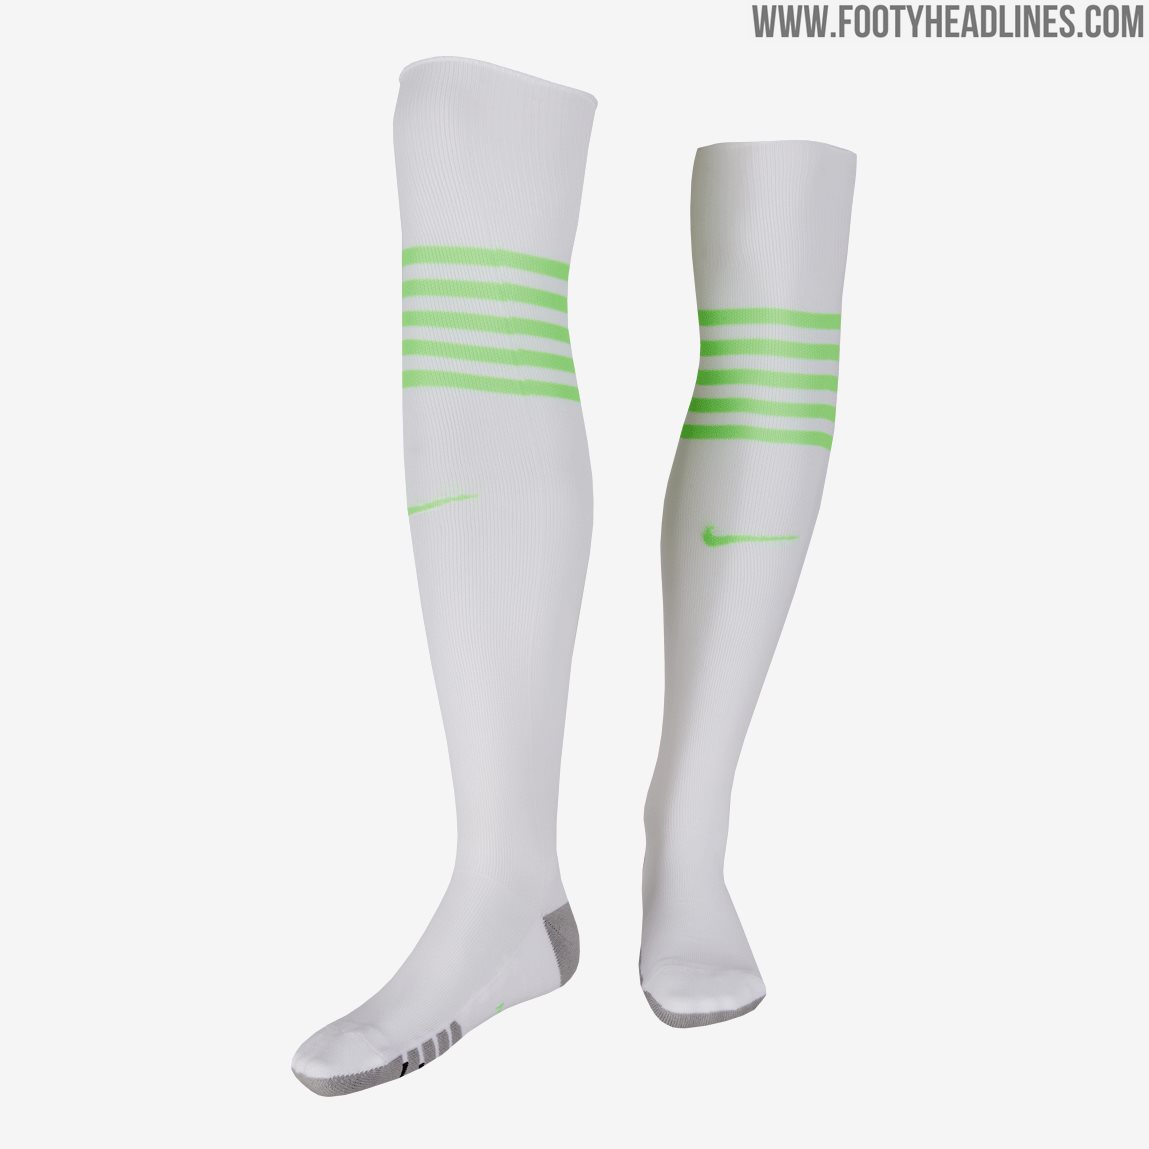 New VW Logo: Nike Wolfsburg 19-20 Home & Away Kits Released - Footy ...